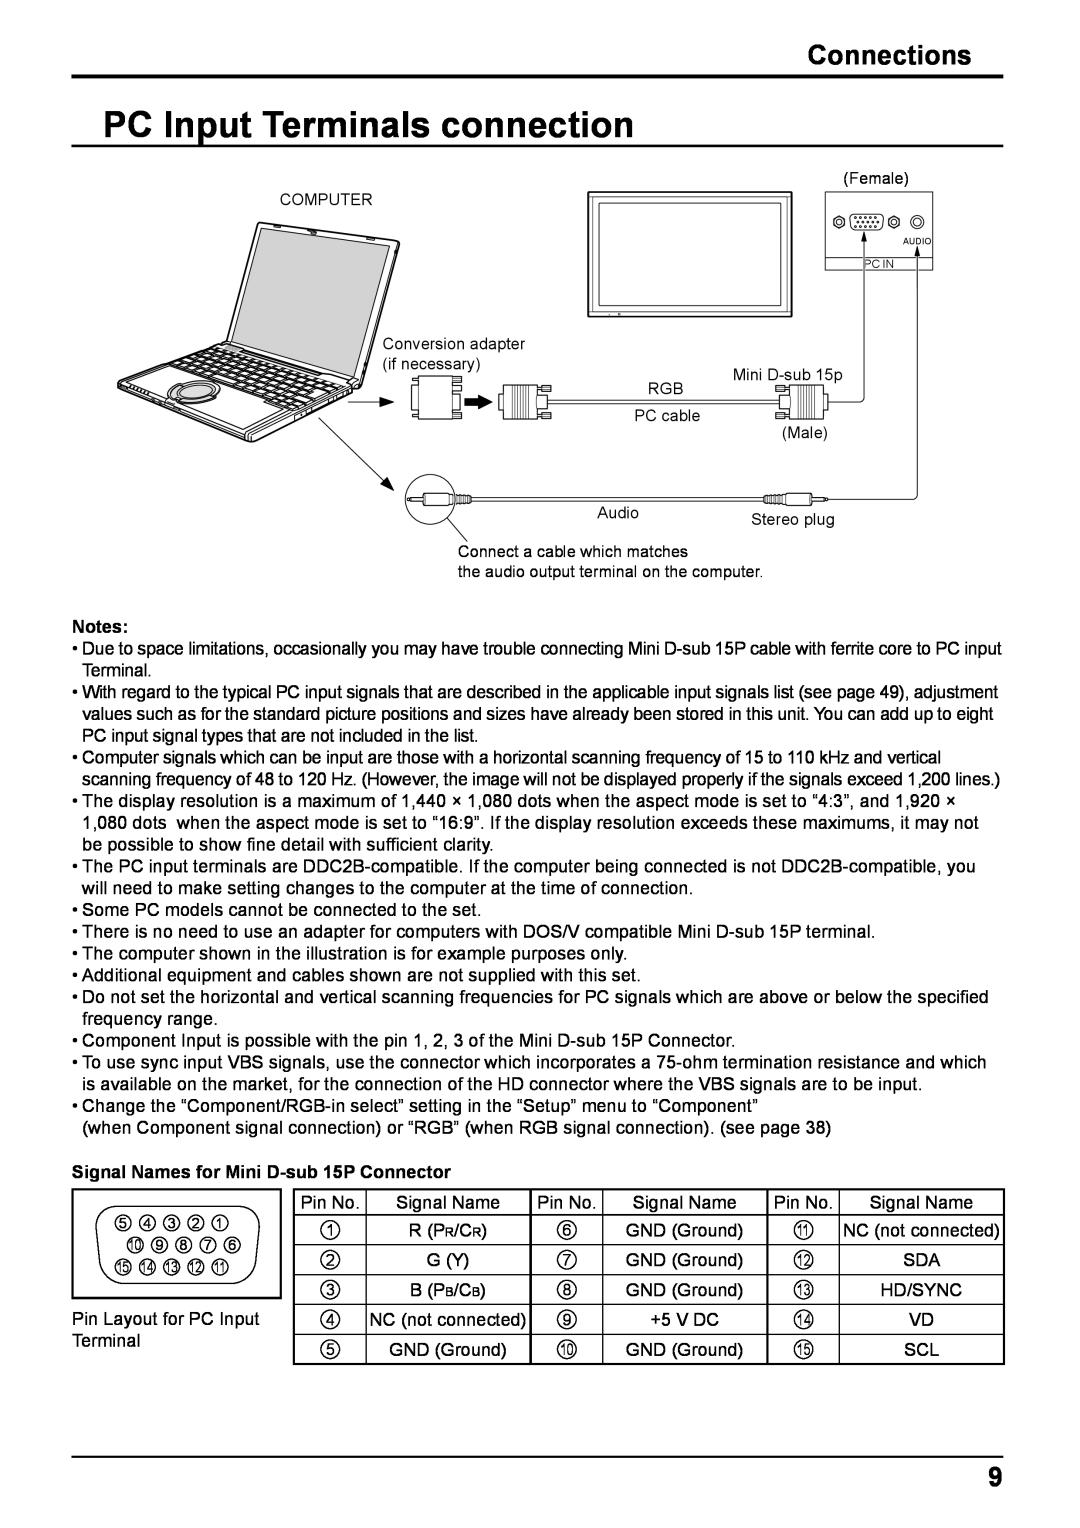 Panasonic TH-50VX100E, TH-65VX100E PC Input Terminals connection, Connections, Signal Names for Mini D-sub 15P Connector 